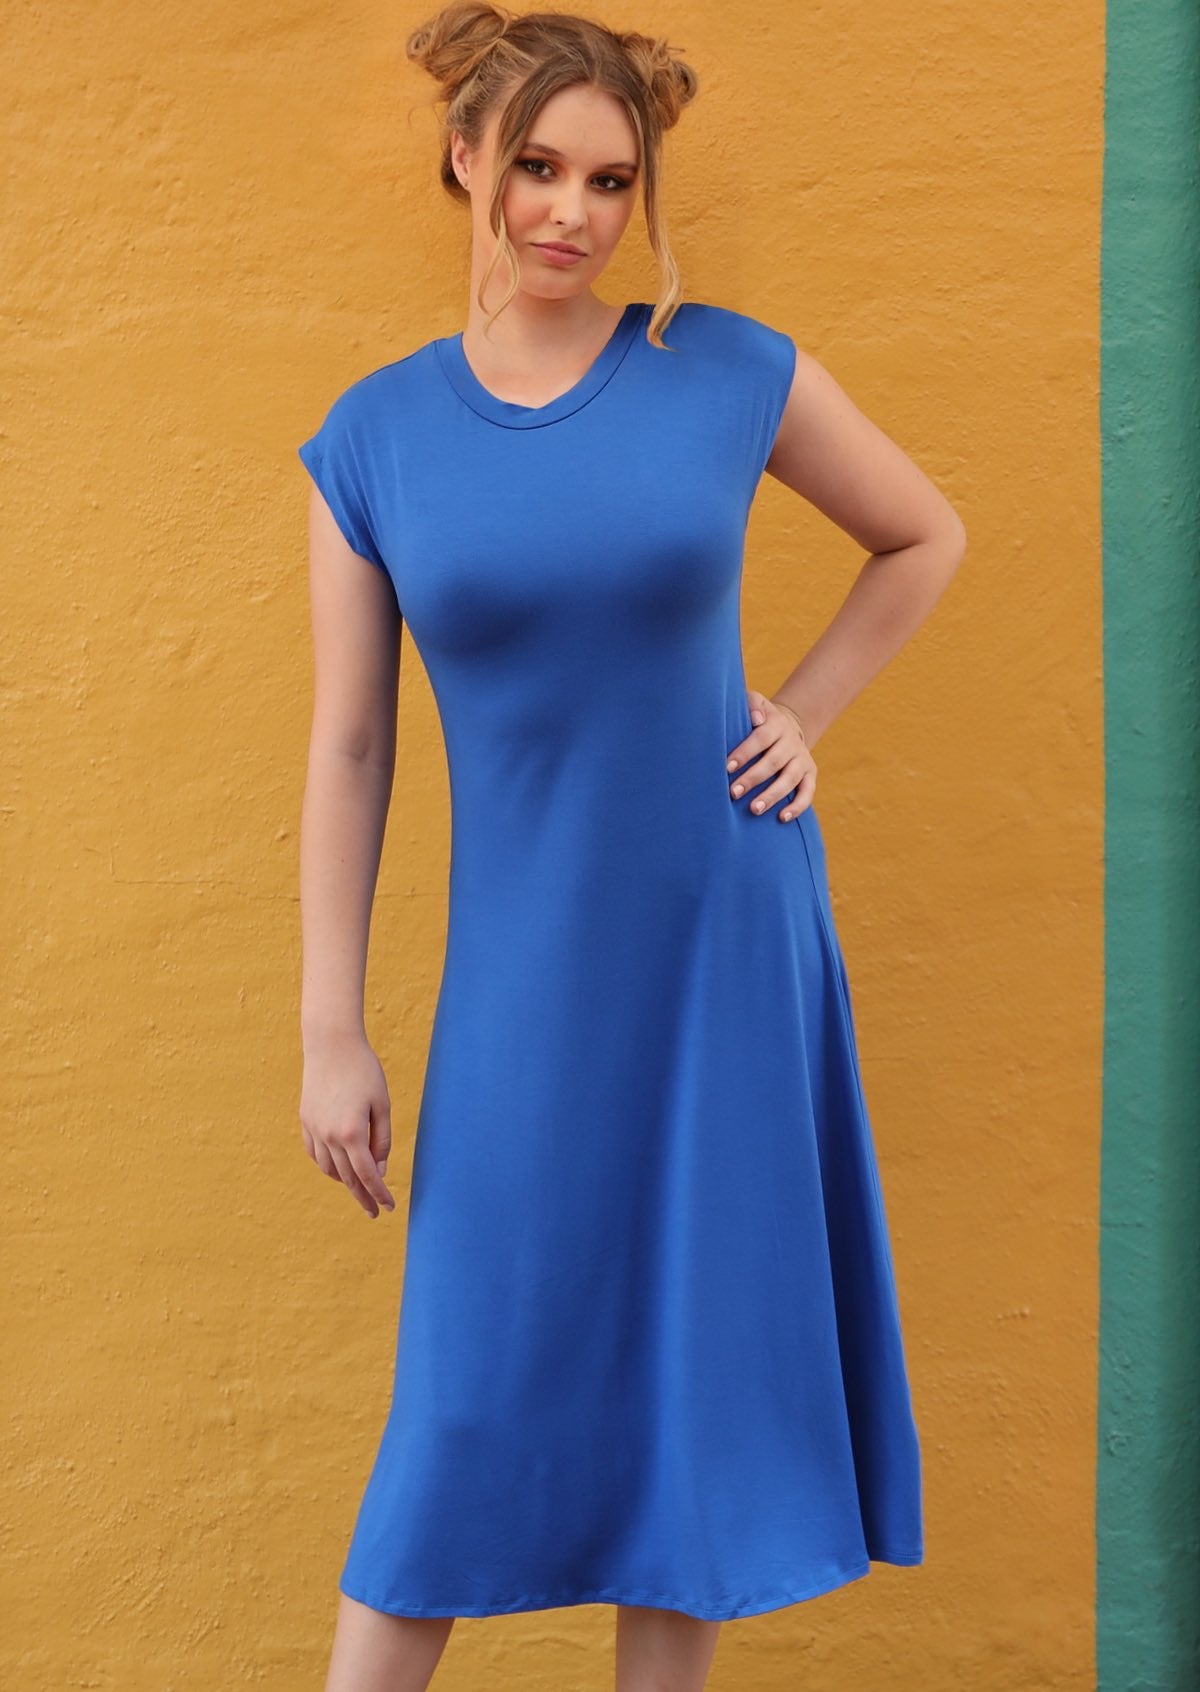 A-line Stretch Rayon Dress high round neck short cap sleeve fitted bodice a-line skirt midi length soft stretch rayon electric blue | Karma East Australia